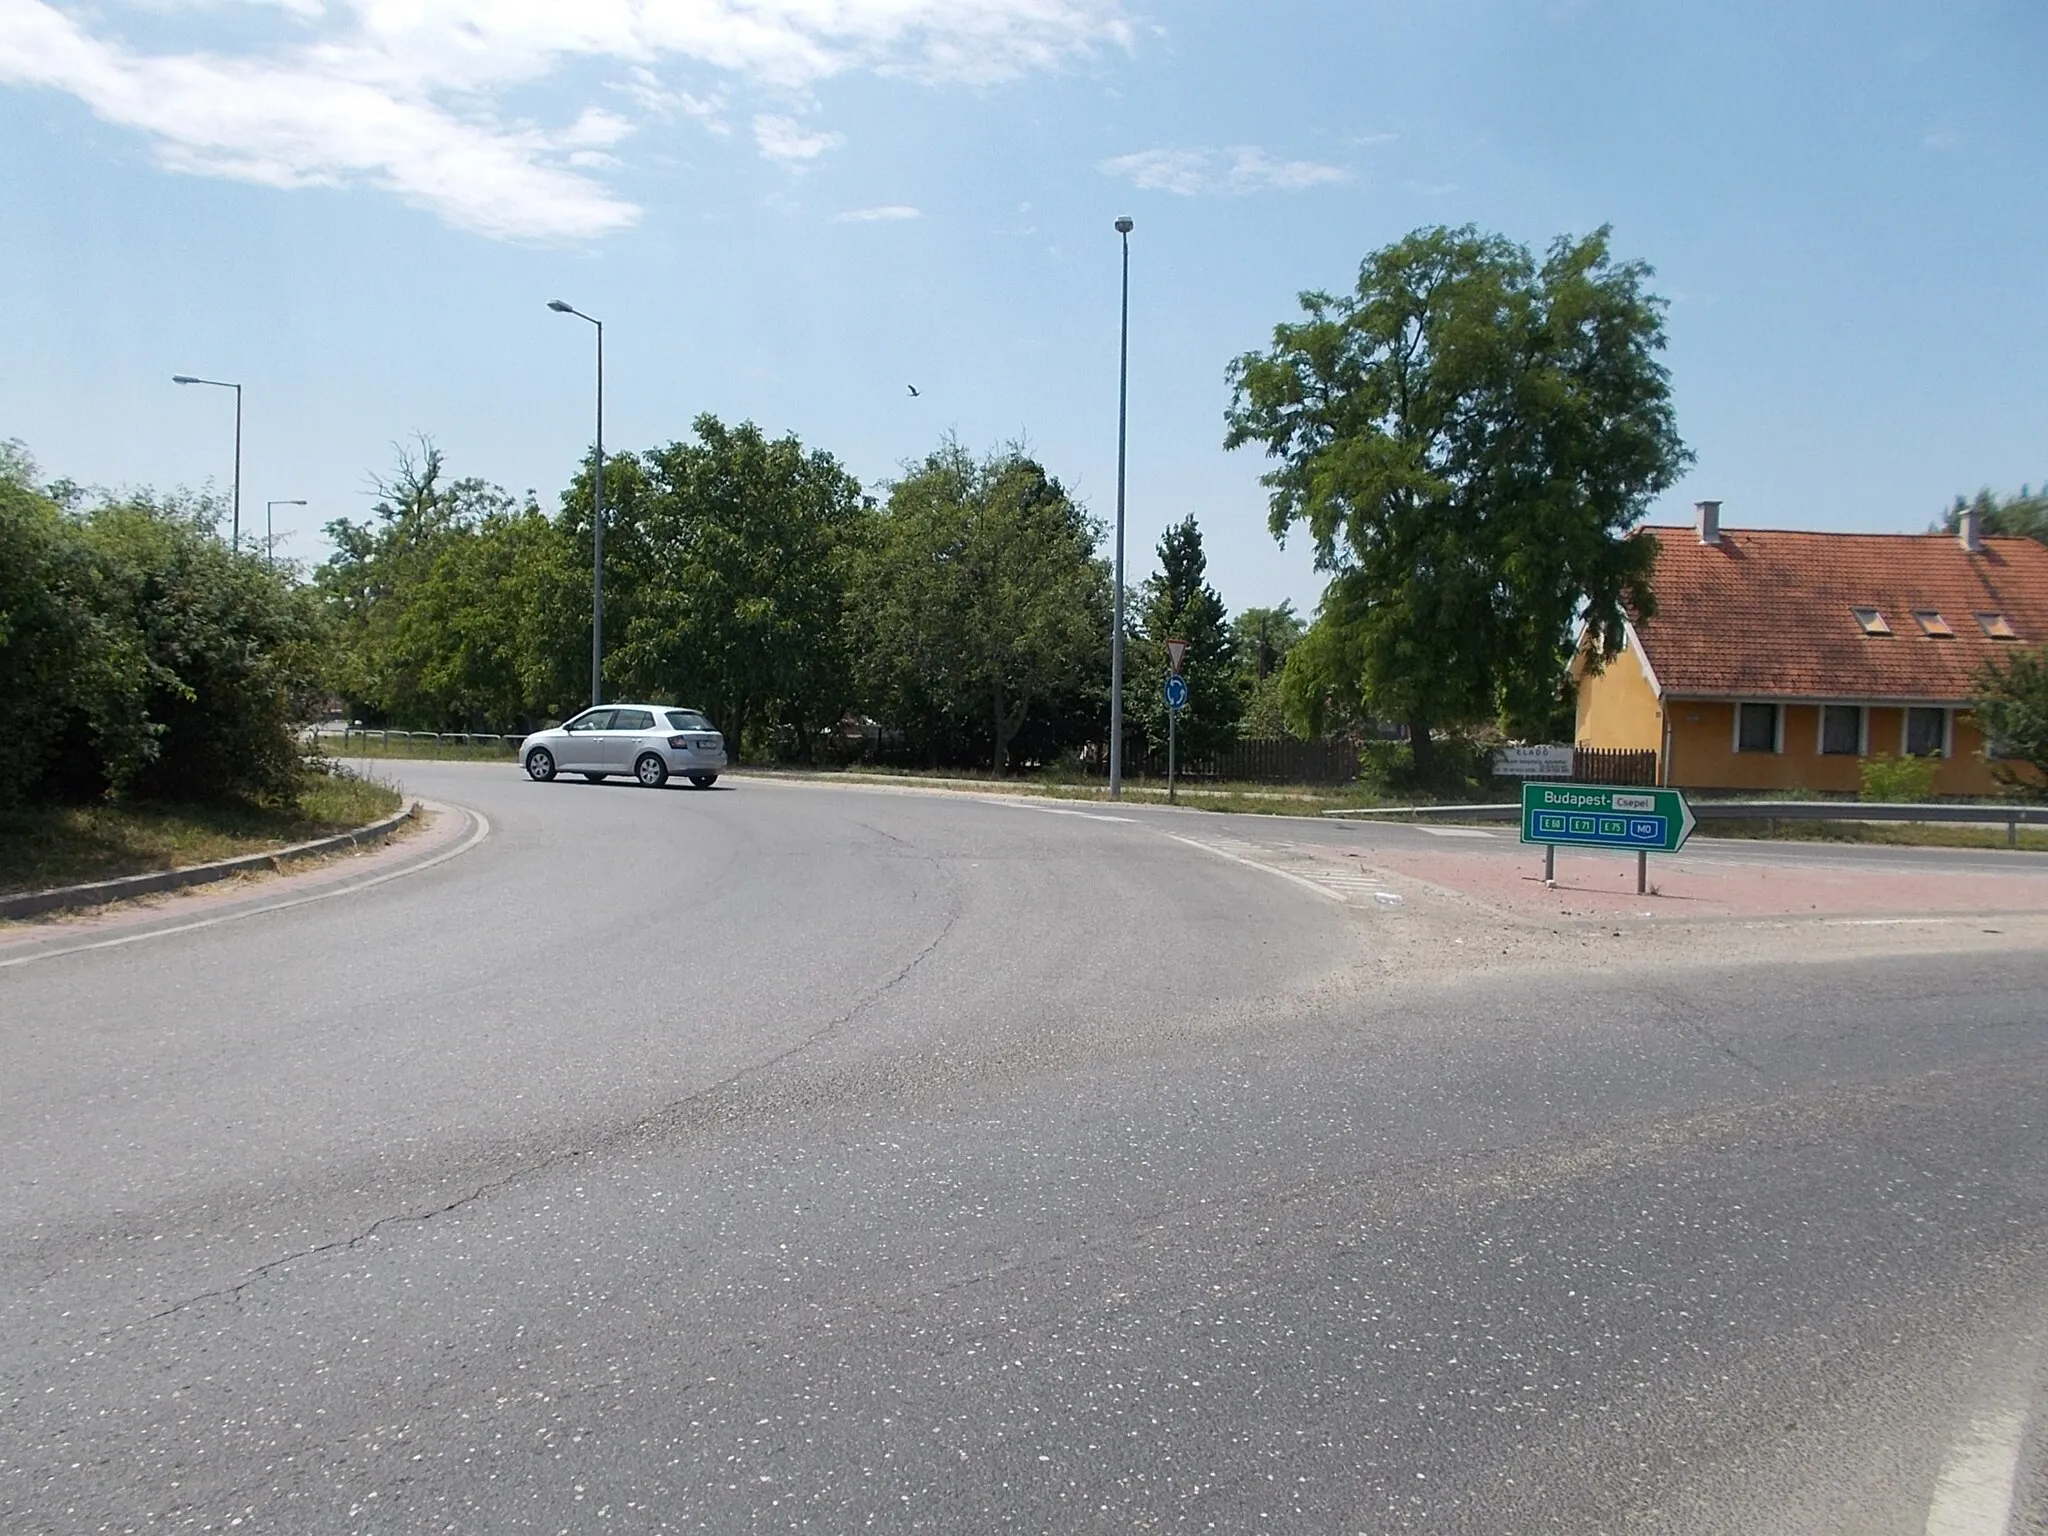 Photo showing: : Roundabout. - Mű út (Road 5101), Szigethalom, Pest County, Hungary.